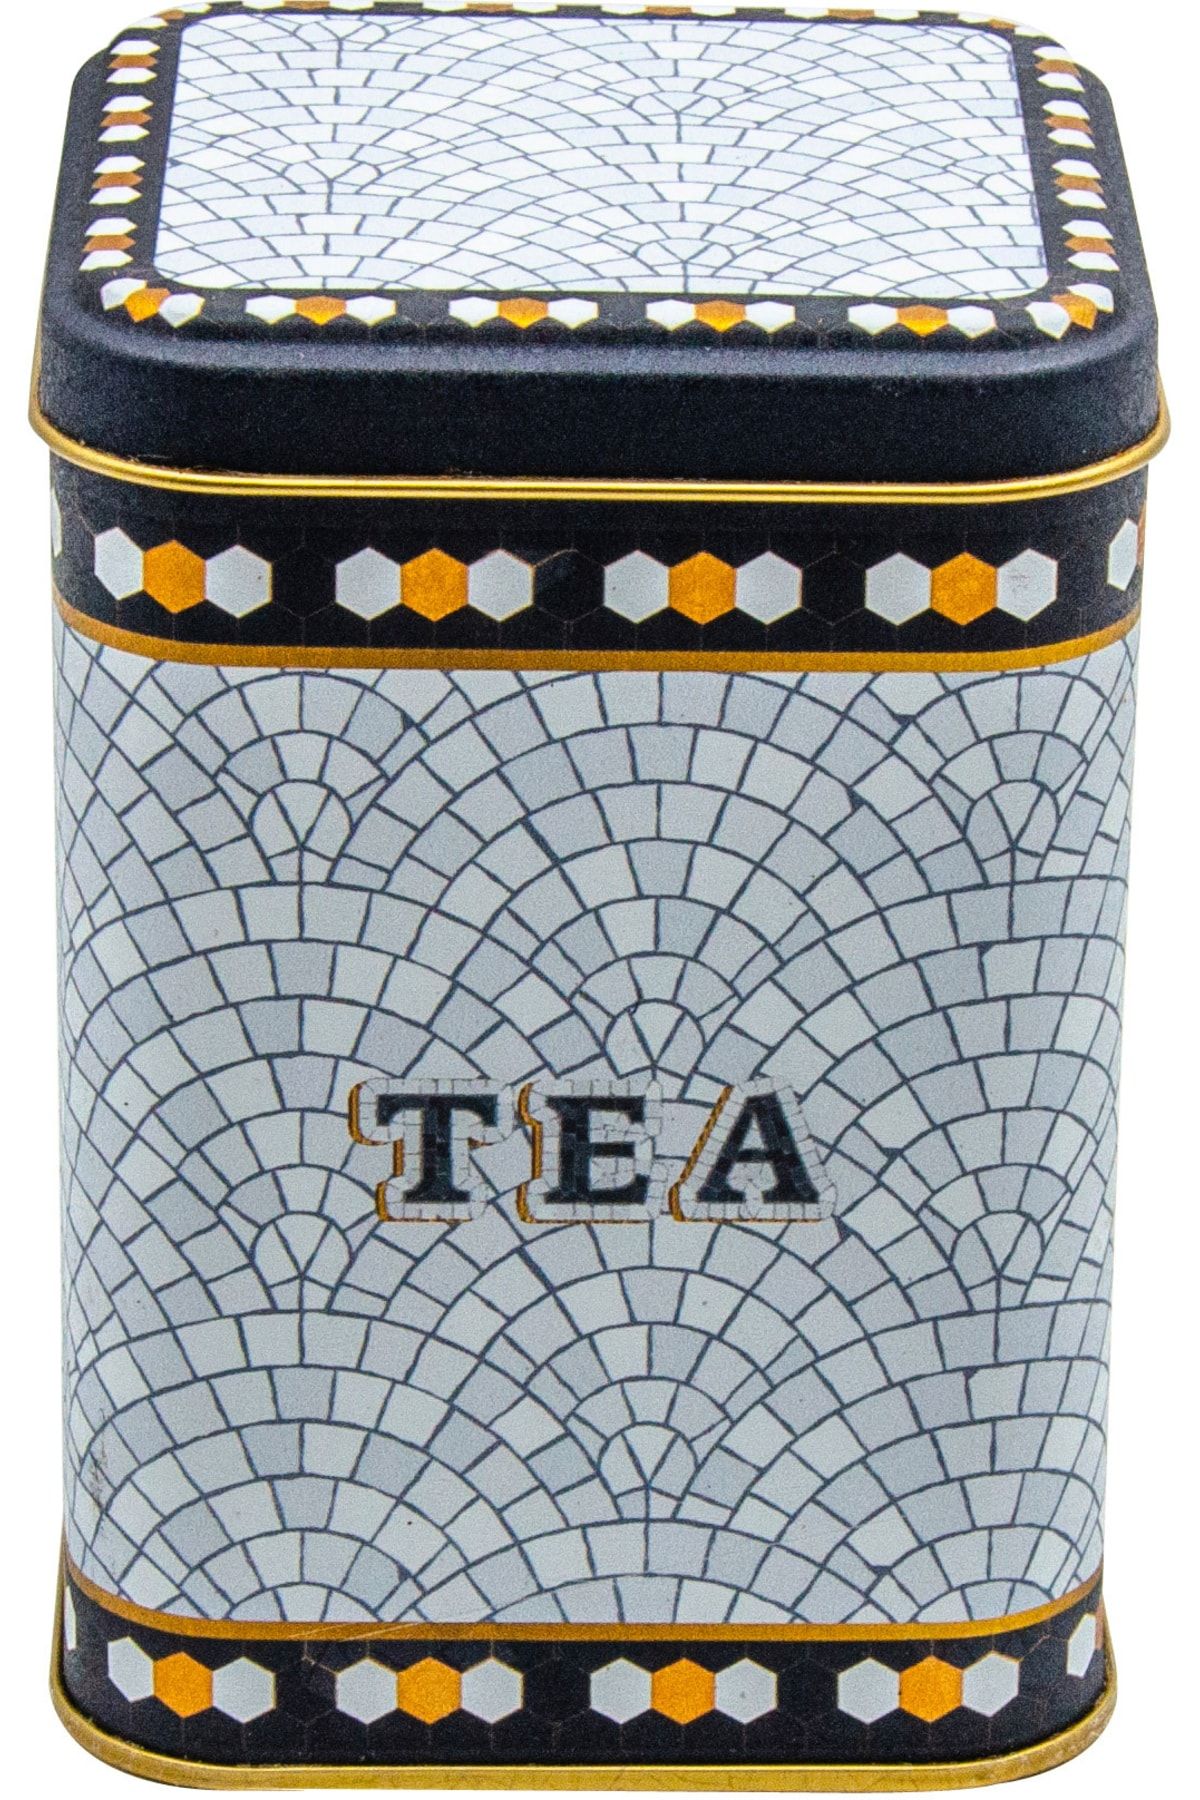 Mosaic Tea Desenli Kare Metal Kutu, 9 x 9 x 12.5 cm, 1 lt